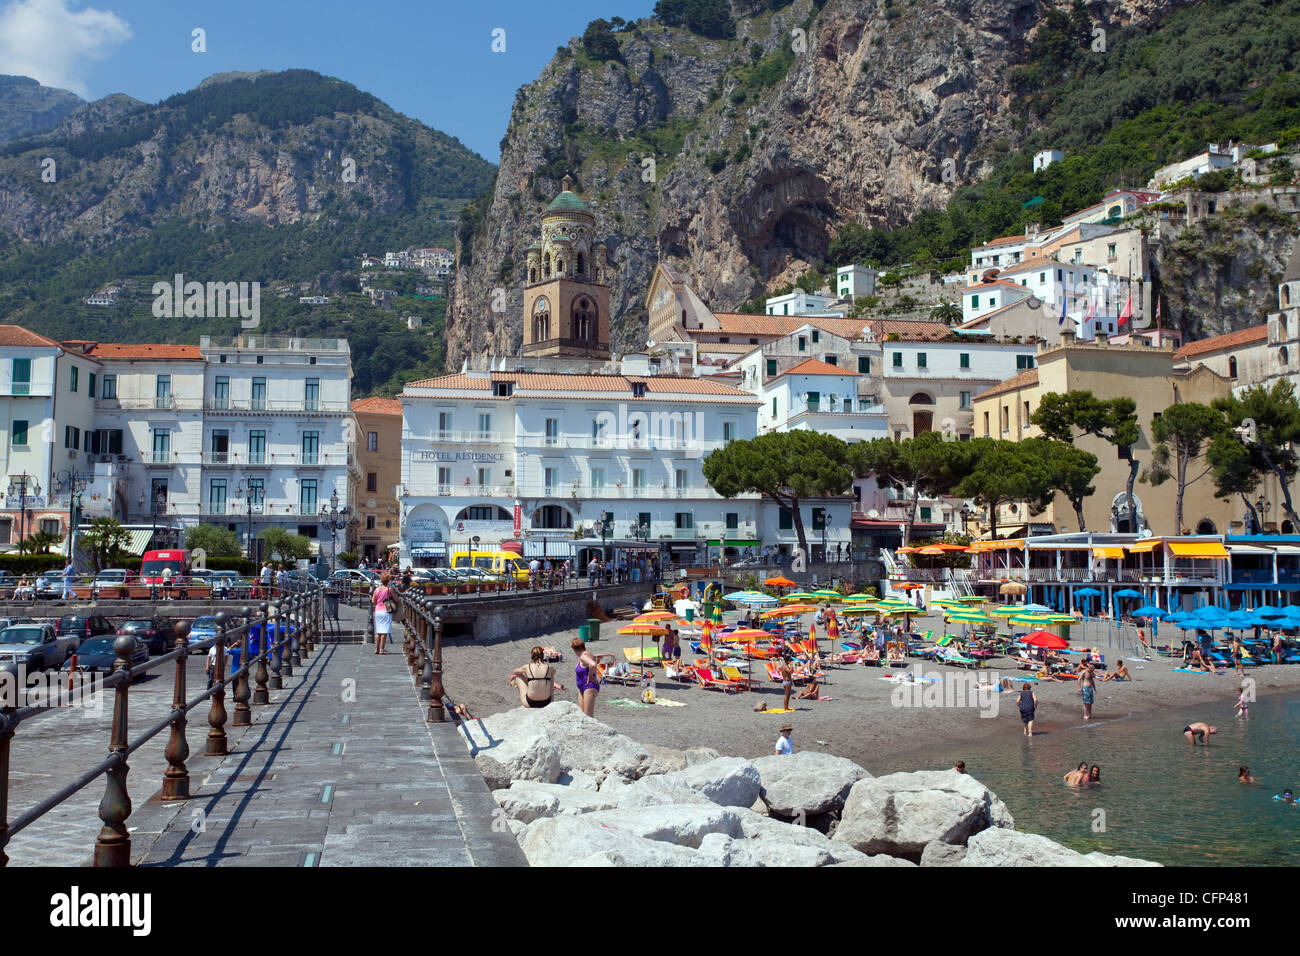 Beach of the village Amalfi, Amalfi coast, Unesco World Heritage site, Campania, Italy, Mediterranean sea, Europe Stock Photo